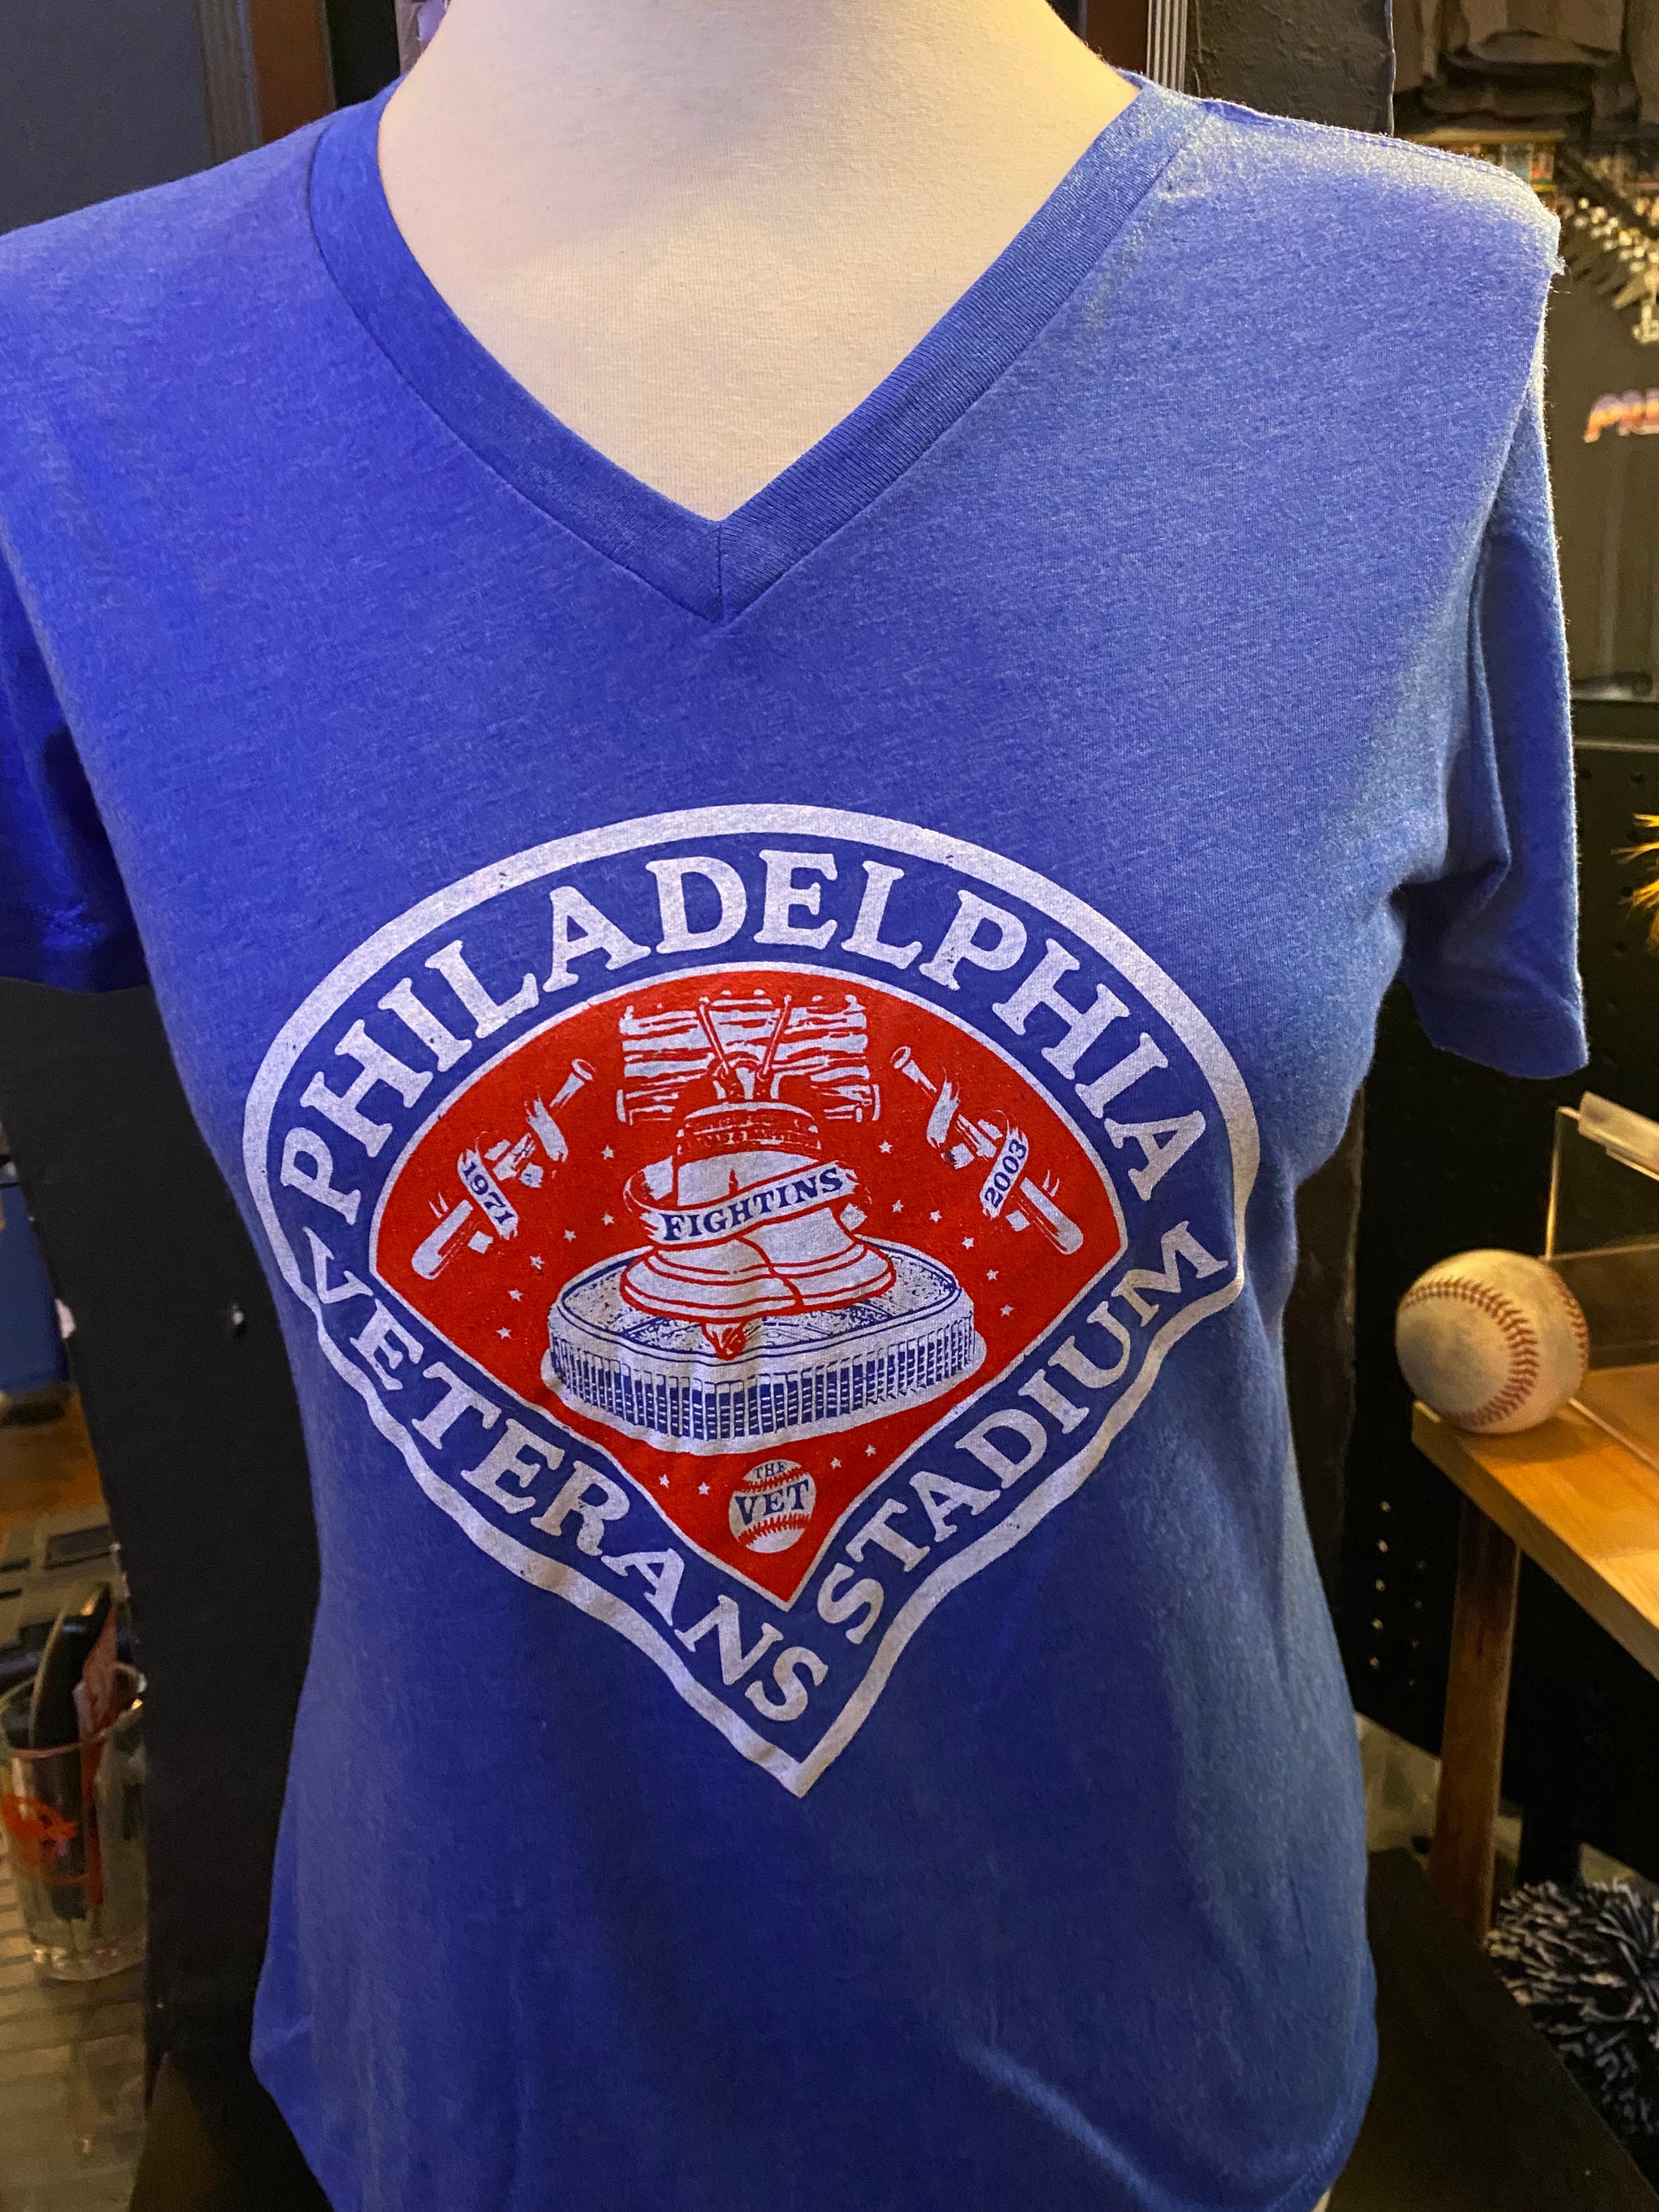 47 Men's Philadelphia Phillies Blue Franklin T-Shirt